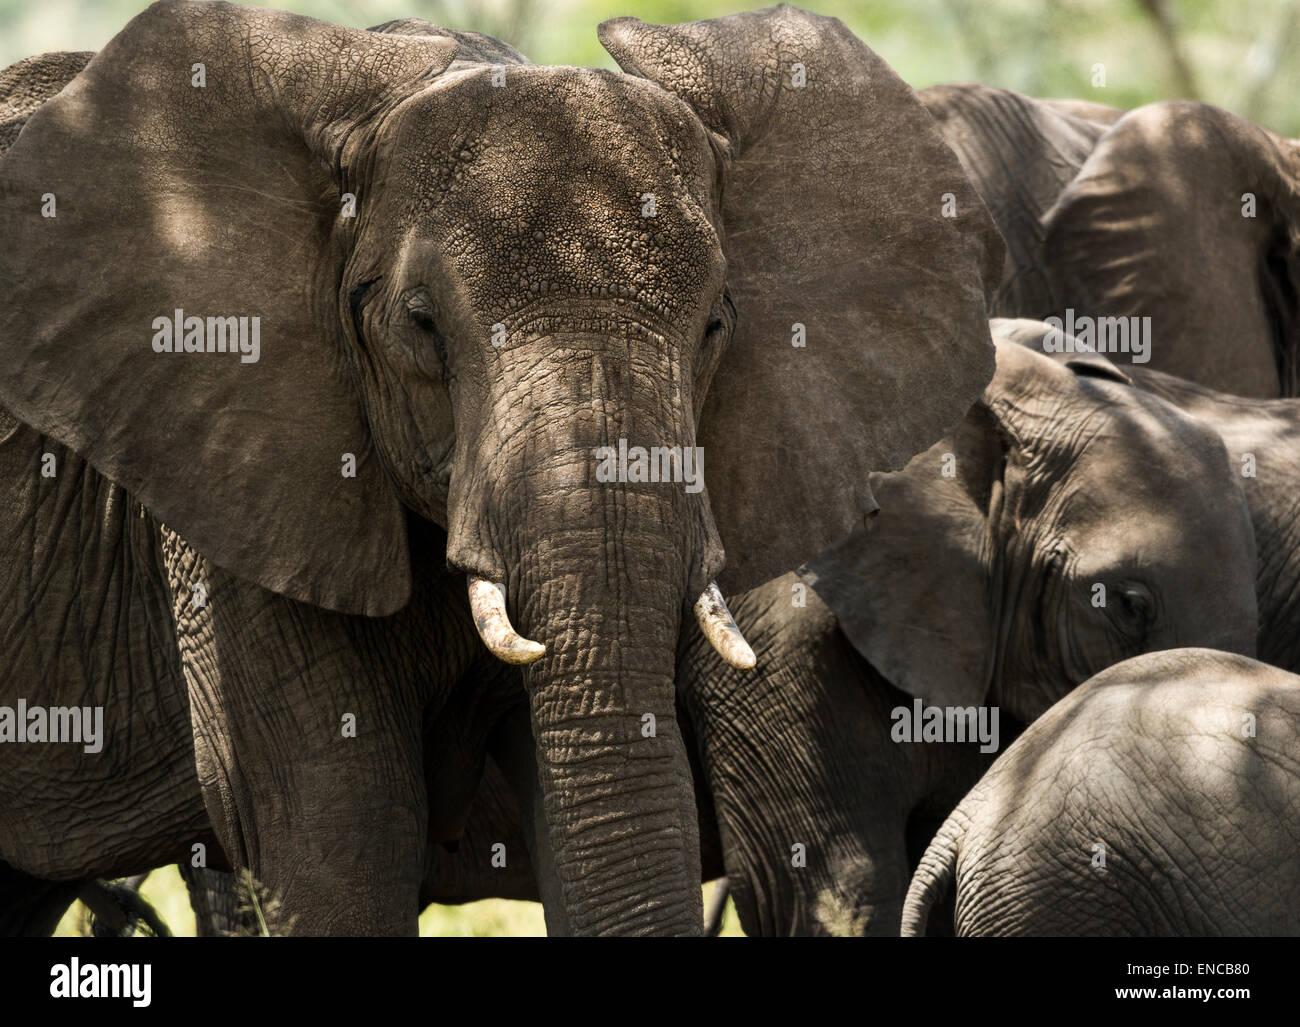 Close-up of a herd of elephants, Serengeti, Tanzania, Africa Stock Photo